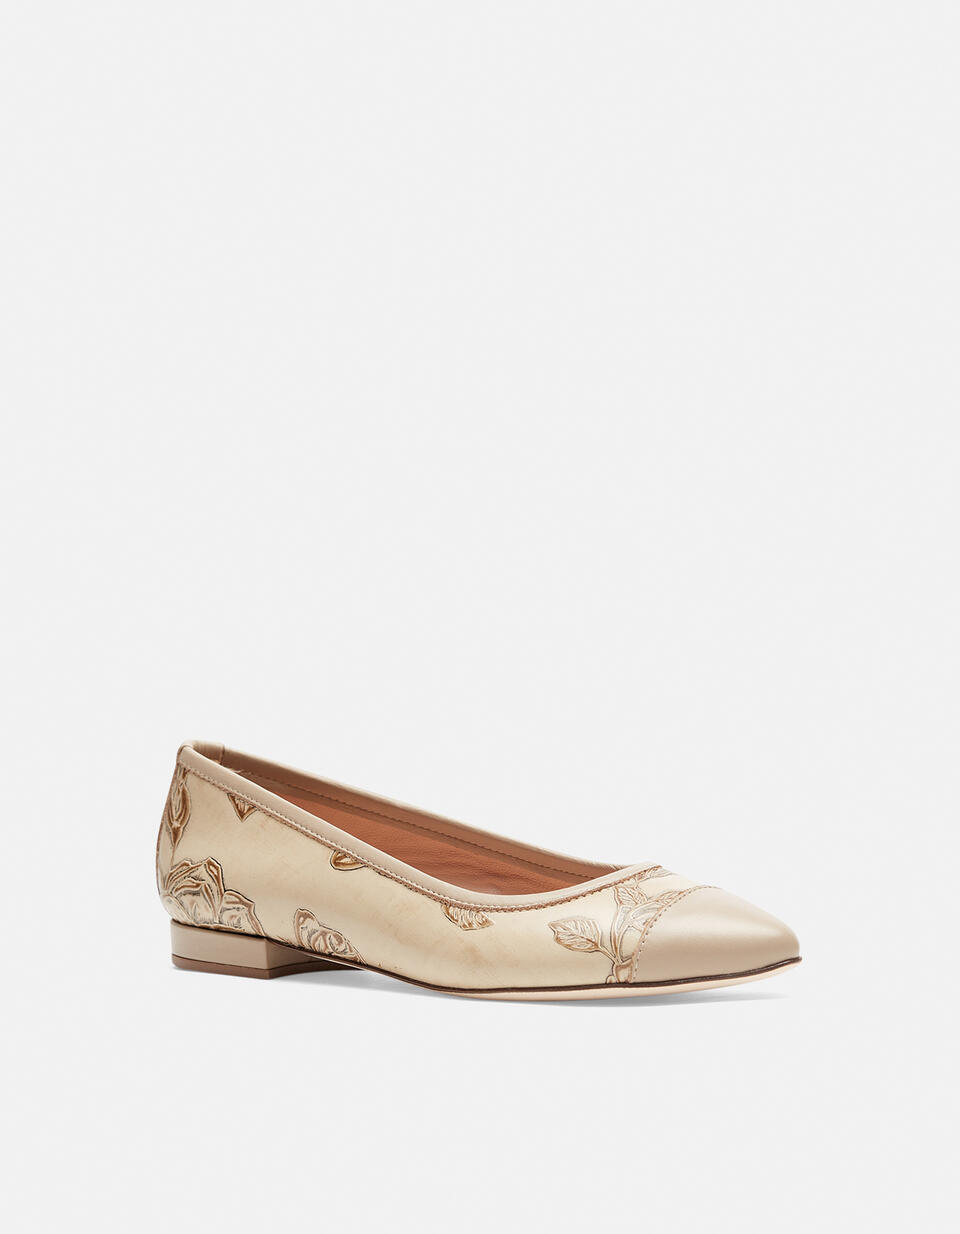 Ballet shoe Taupe  - Schuhe - Special Price - Cuoieria Fiorentina